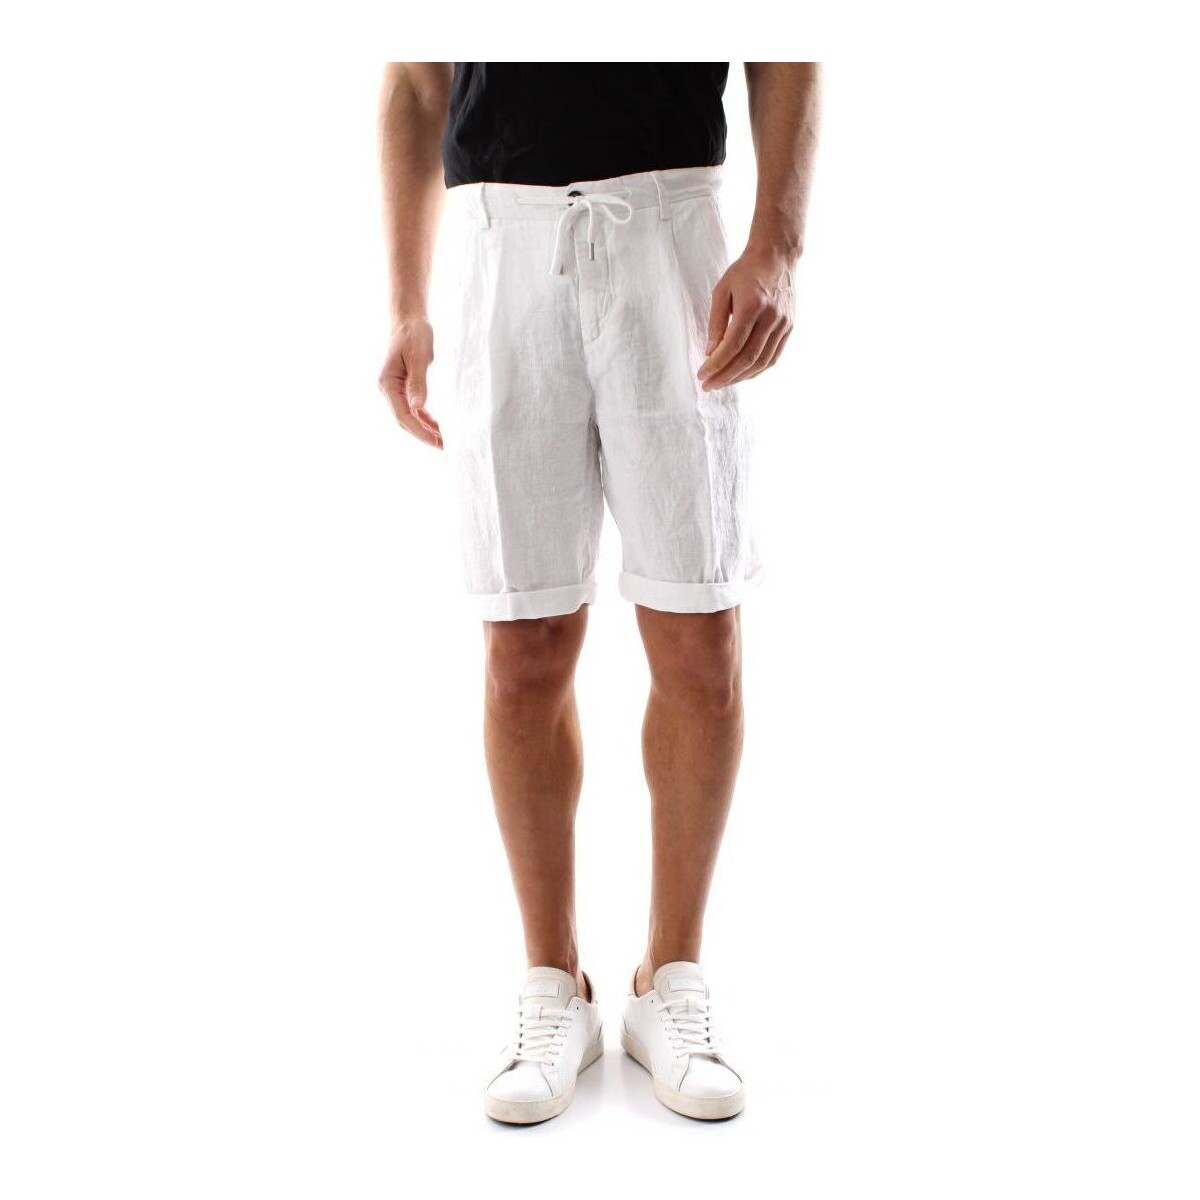 Vêtements Homme Shorts sheepskin / Bermudas 40weft COACHBE 1284-40W441 Blanc